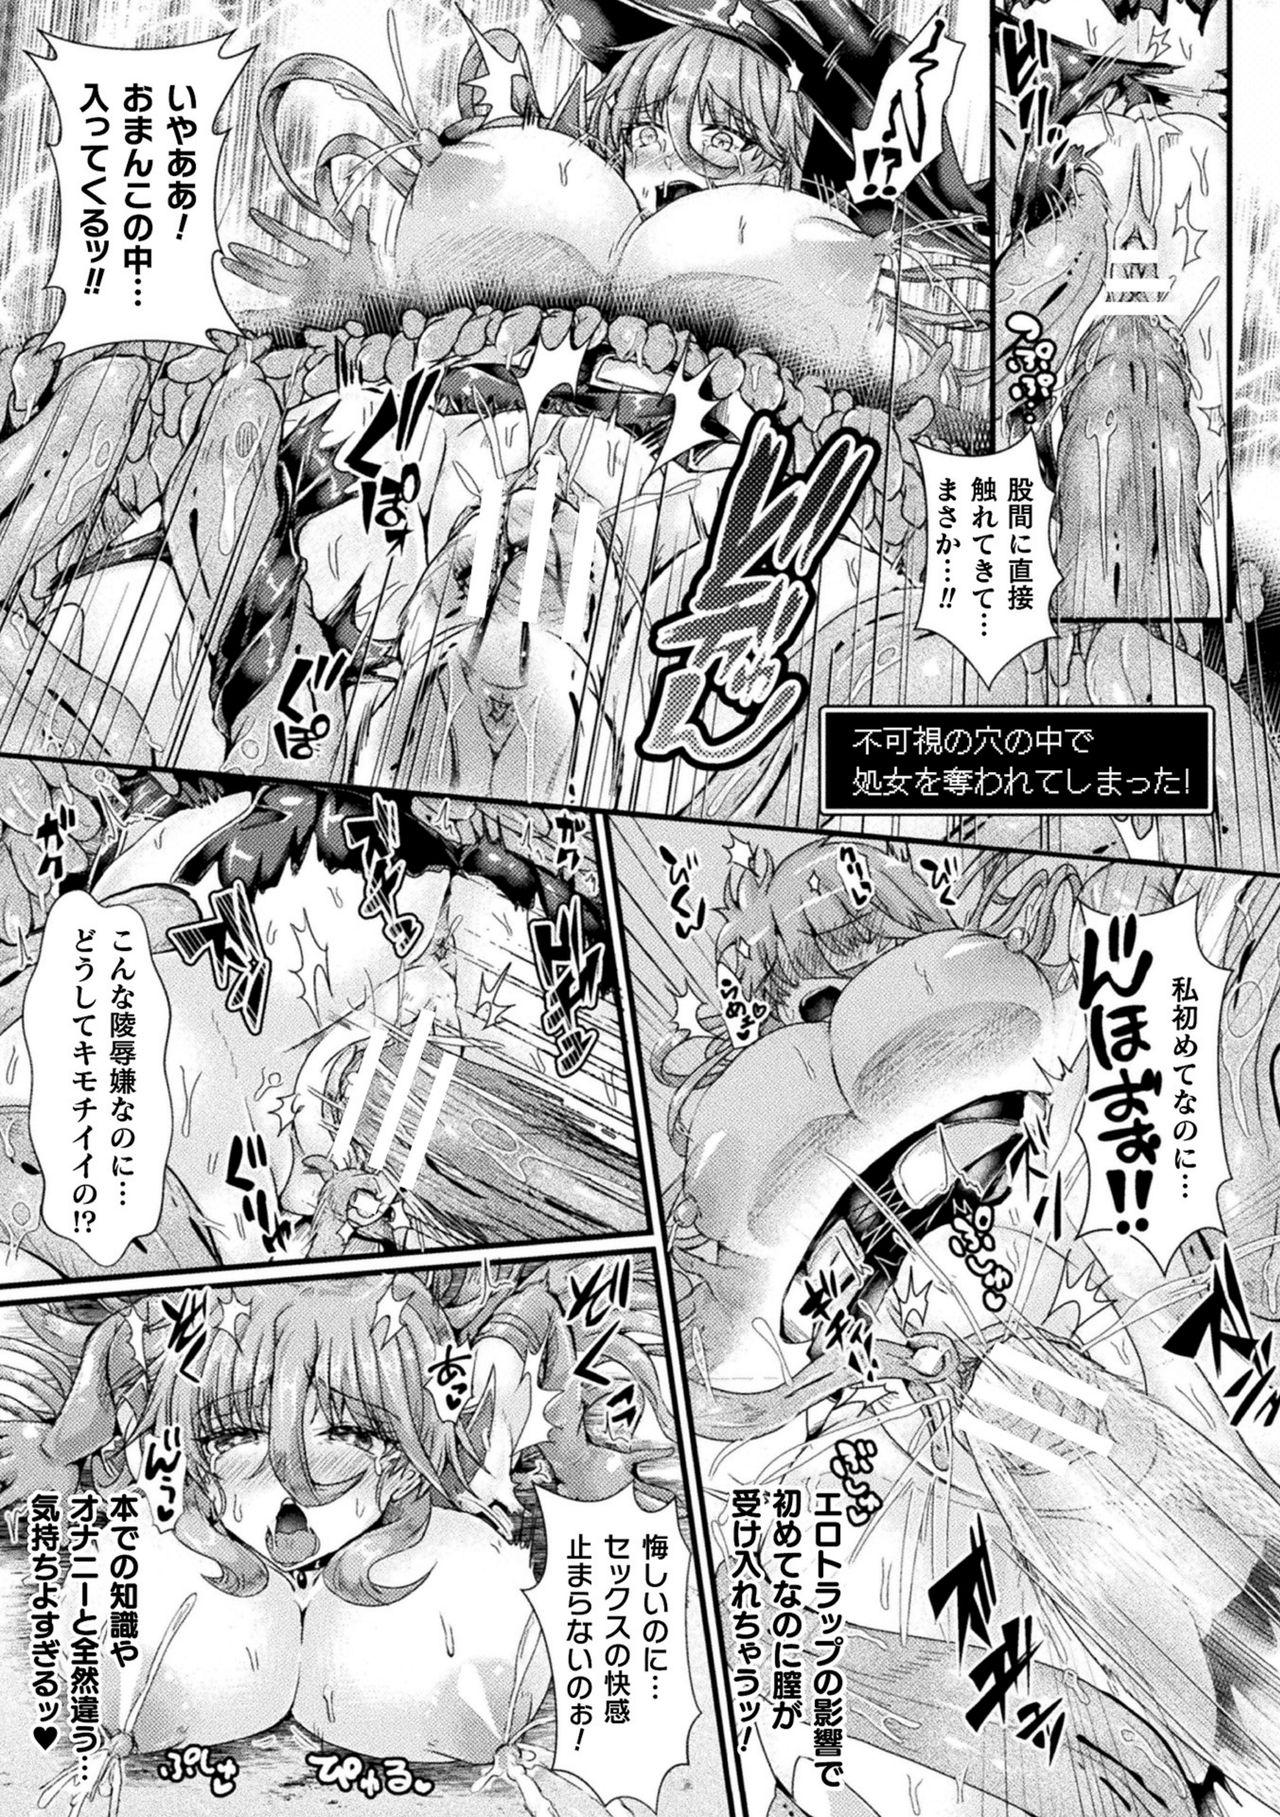 2D Comic Magazine Zecchou Kairaku ga Tomaranai Ero-Trap Dungeon Vol. 3 48